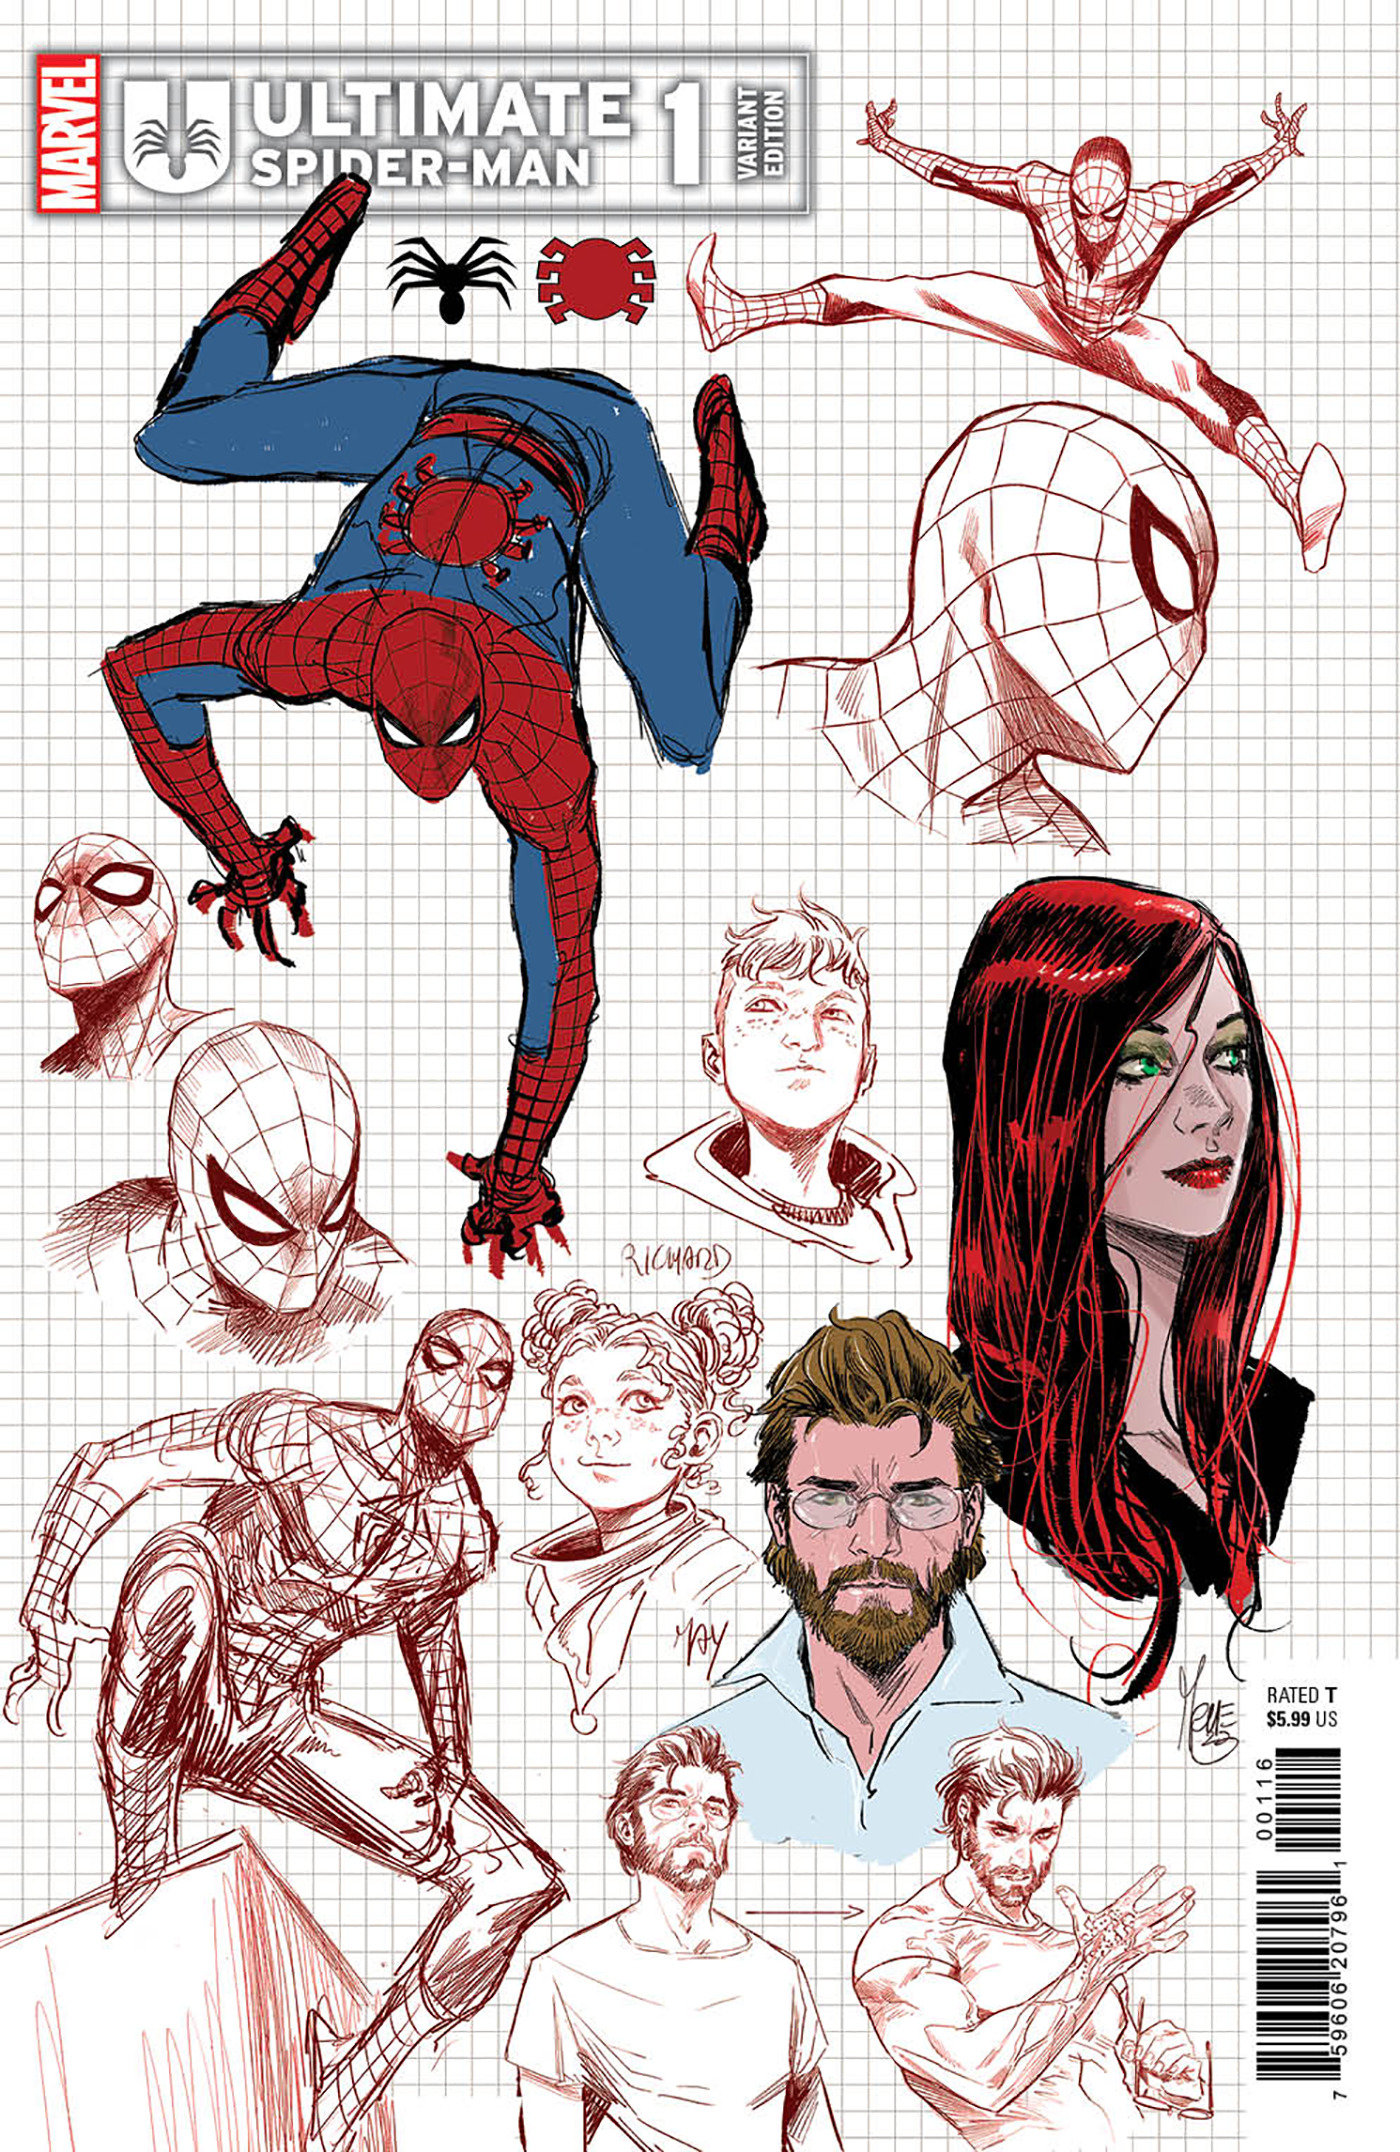 Ultimate Spider-Man #1 Marco Checchetto Design Variant 1 for 10 Incentive